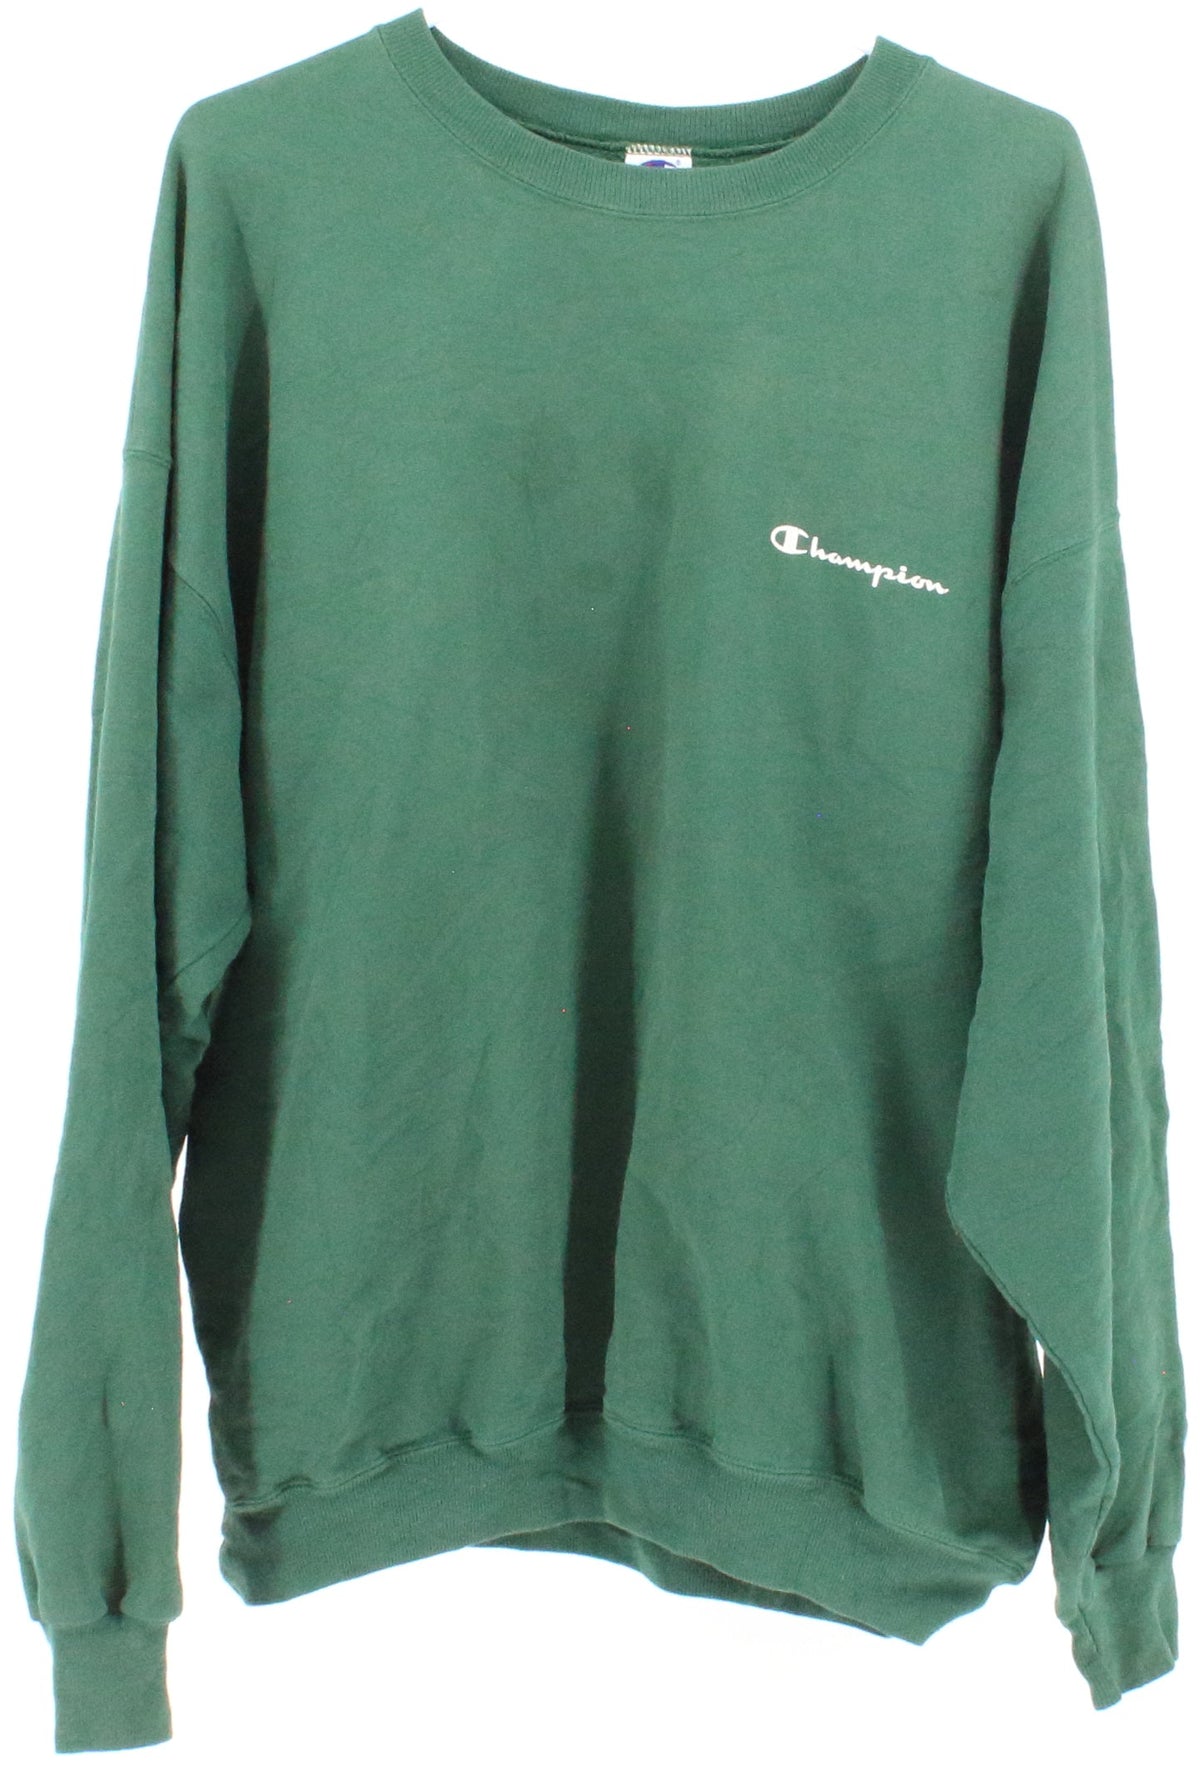 Champion Dark Green Sweatshirt With Small White Front Logo